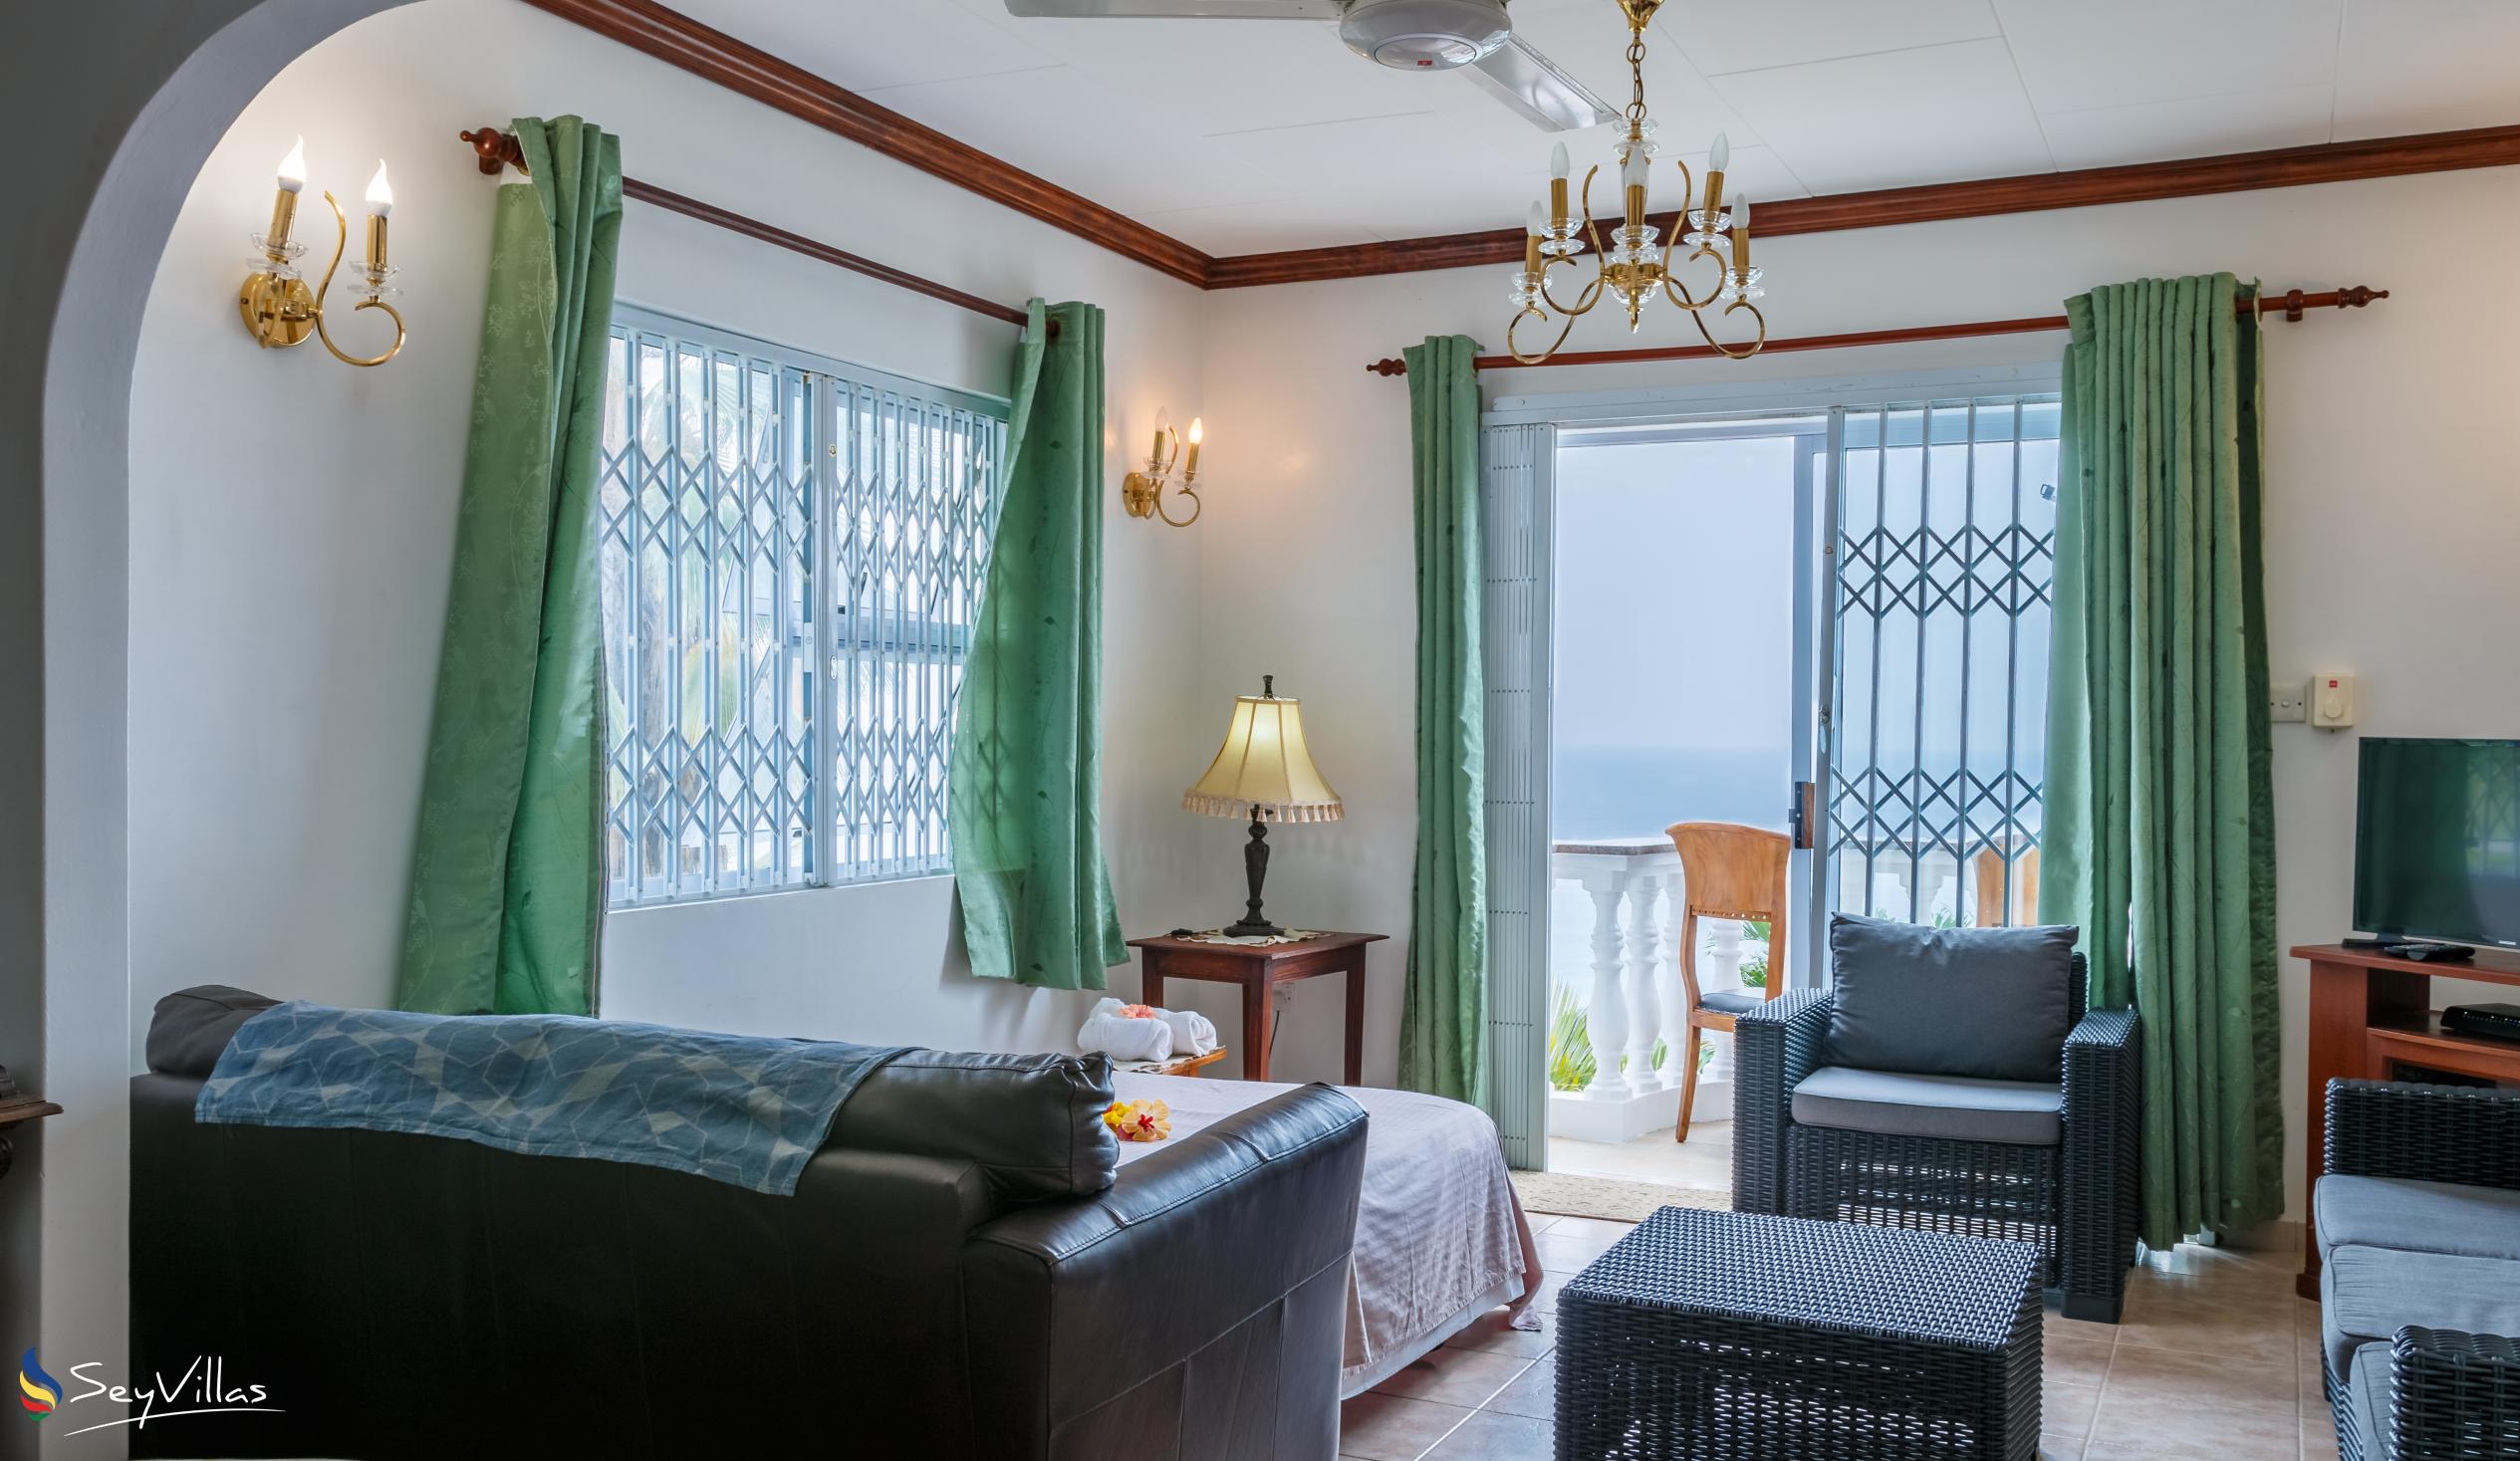 Foto 69: Villa Bel Age - Petit appartement - Mahé (Seychelles)